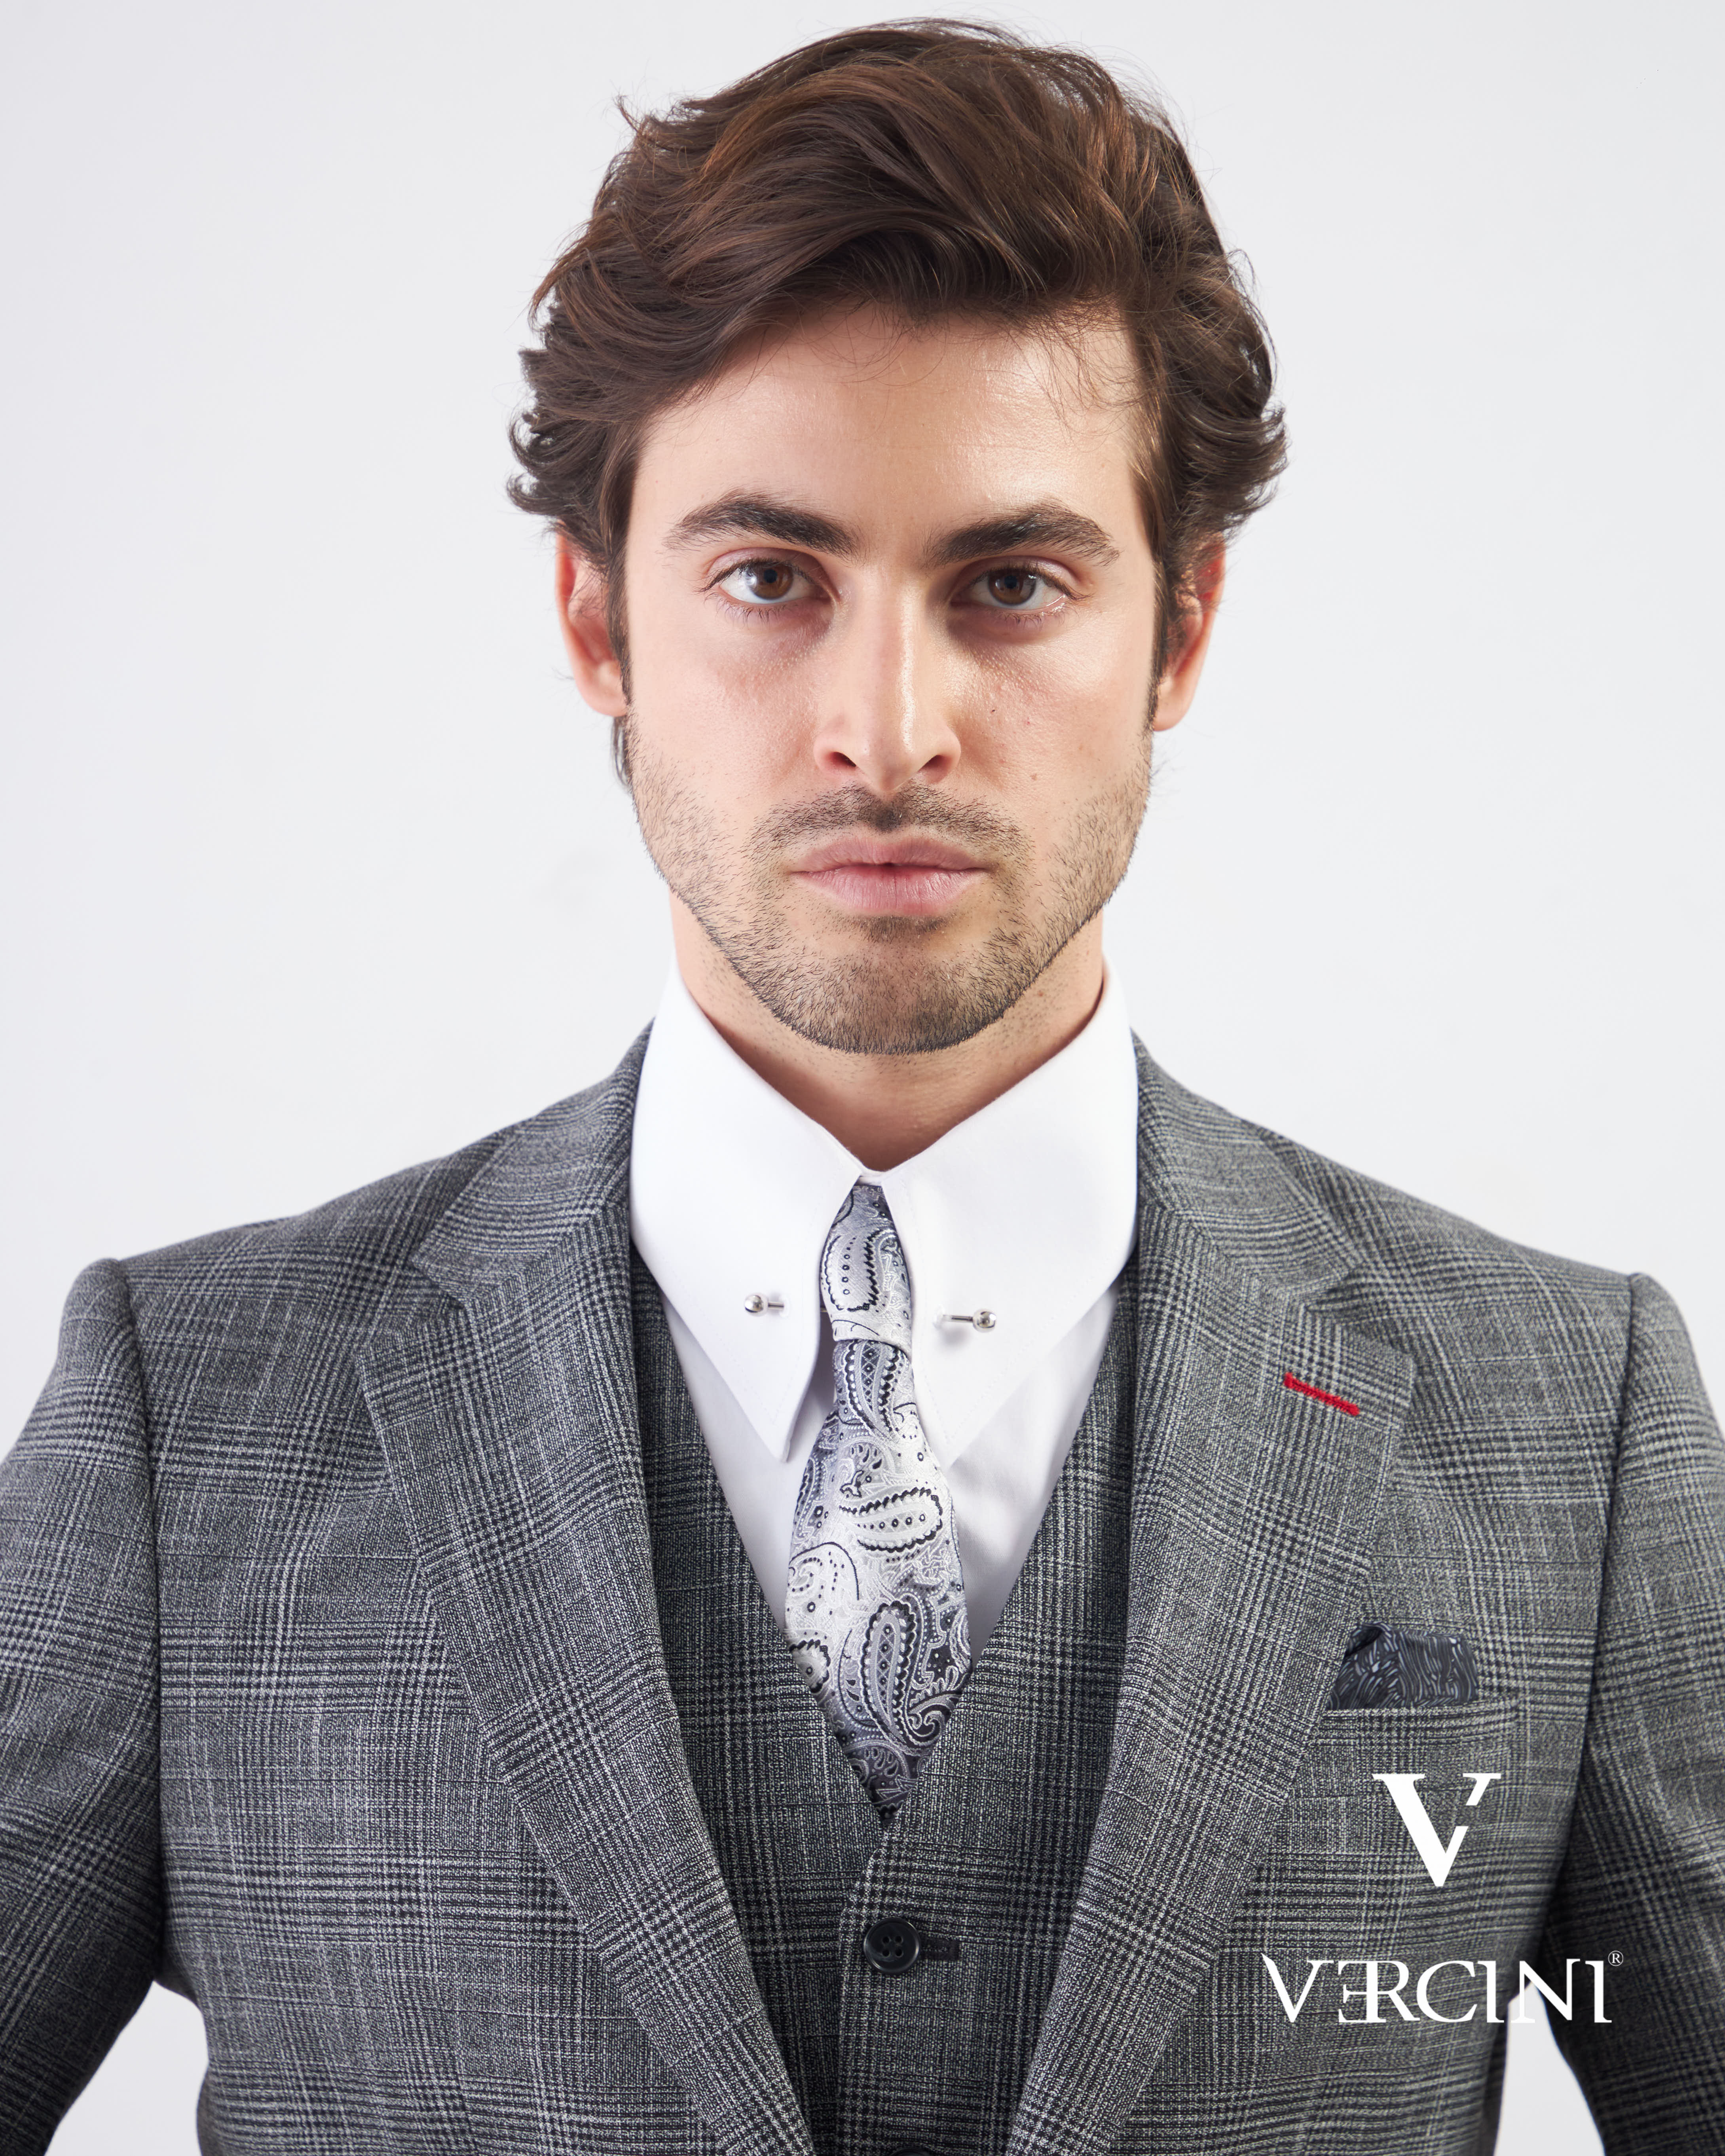 Vercini Charcoal Elegance Three-Piece Men's Suit